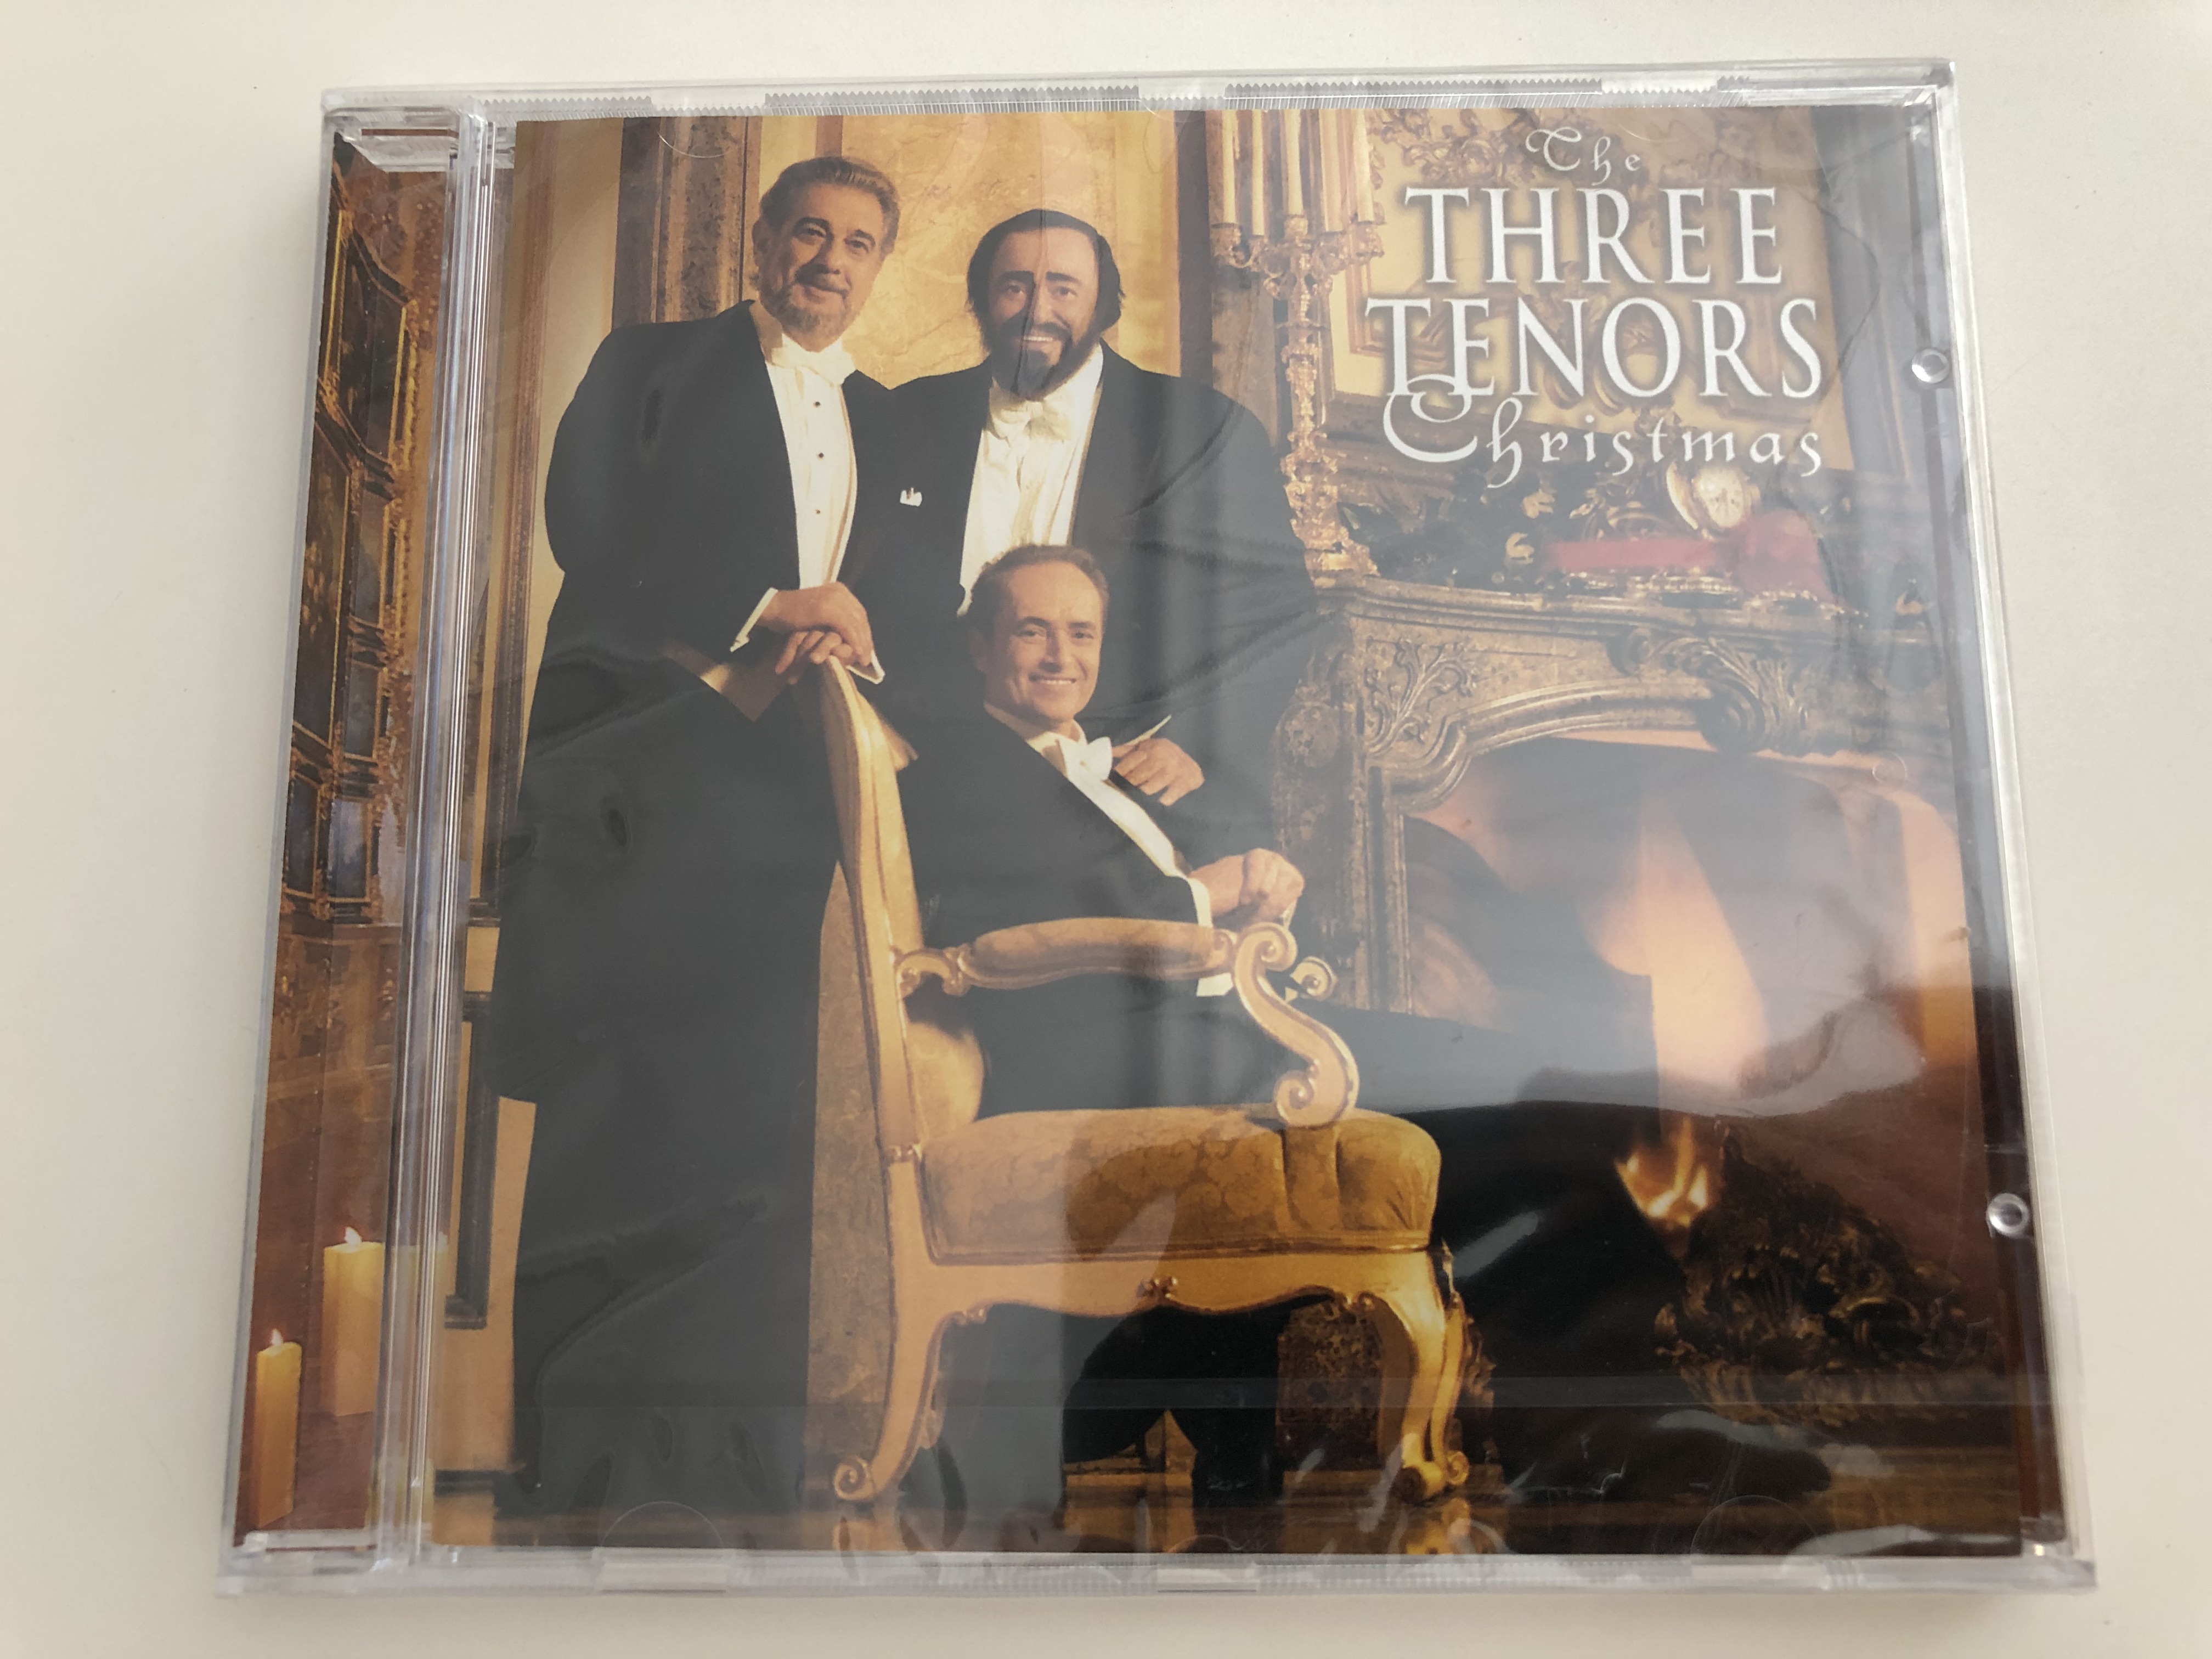 the-three-tenors-christmas-jos-carreras-pl-cido-domingo-luciano-pavarotti-vienna-symphony-conducted-by-steven-mercurio-audio-cd-2000-sony-music-cb-811-1-.jpg